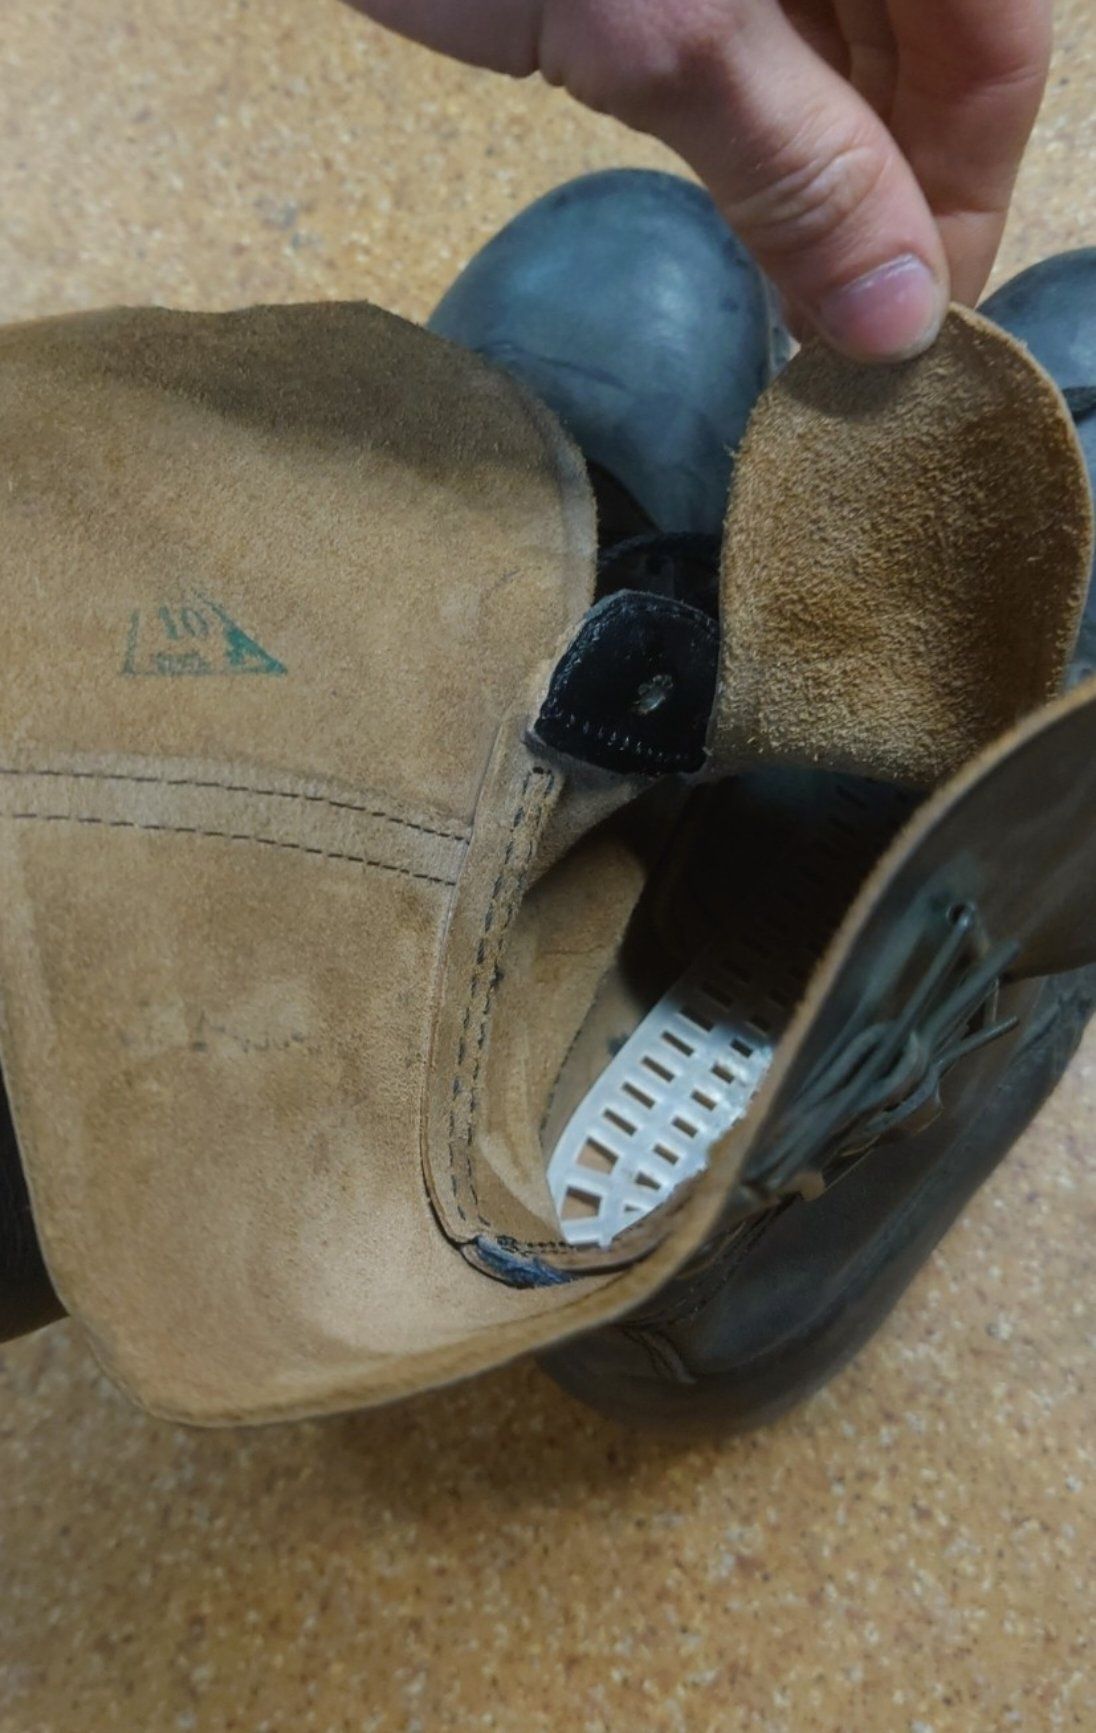 Nowe opinacze buty wojskowe skórzane